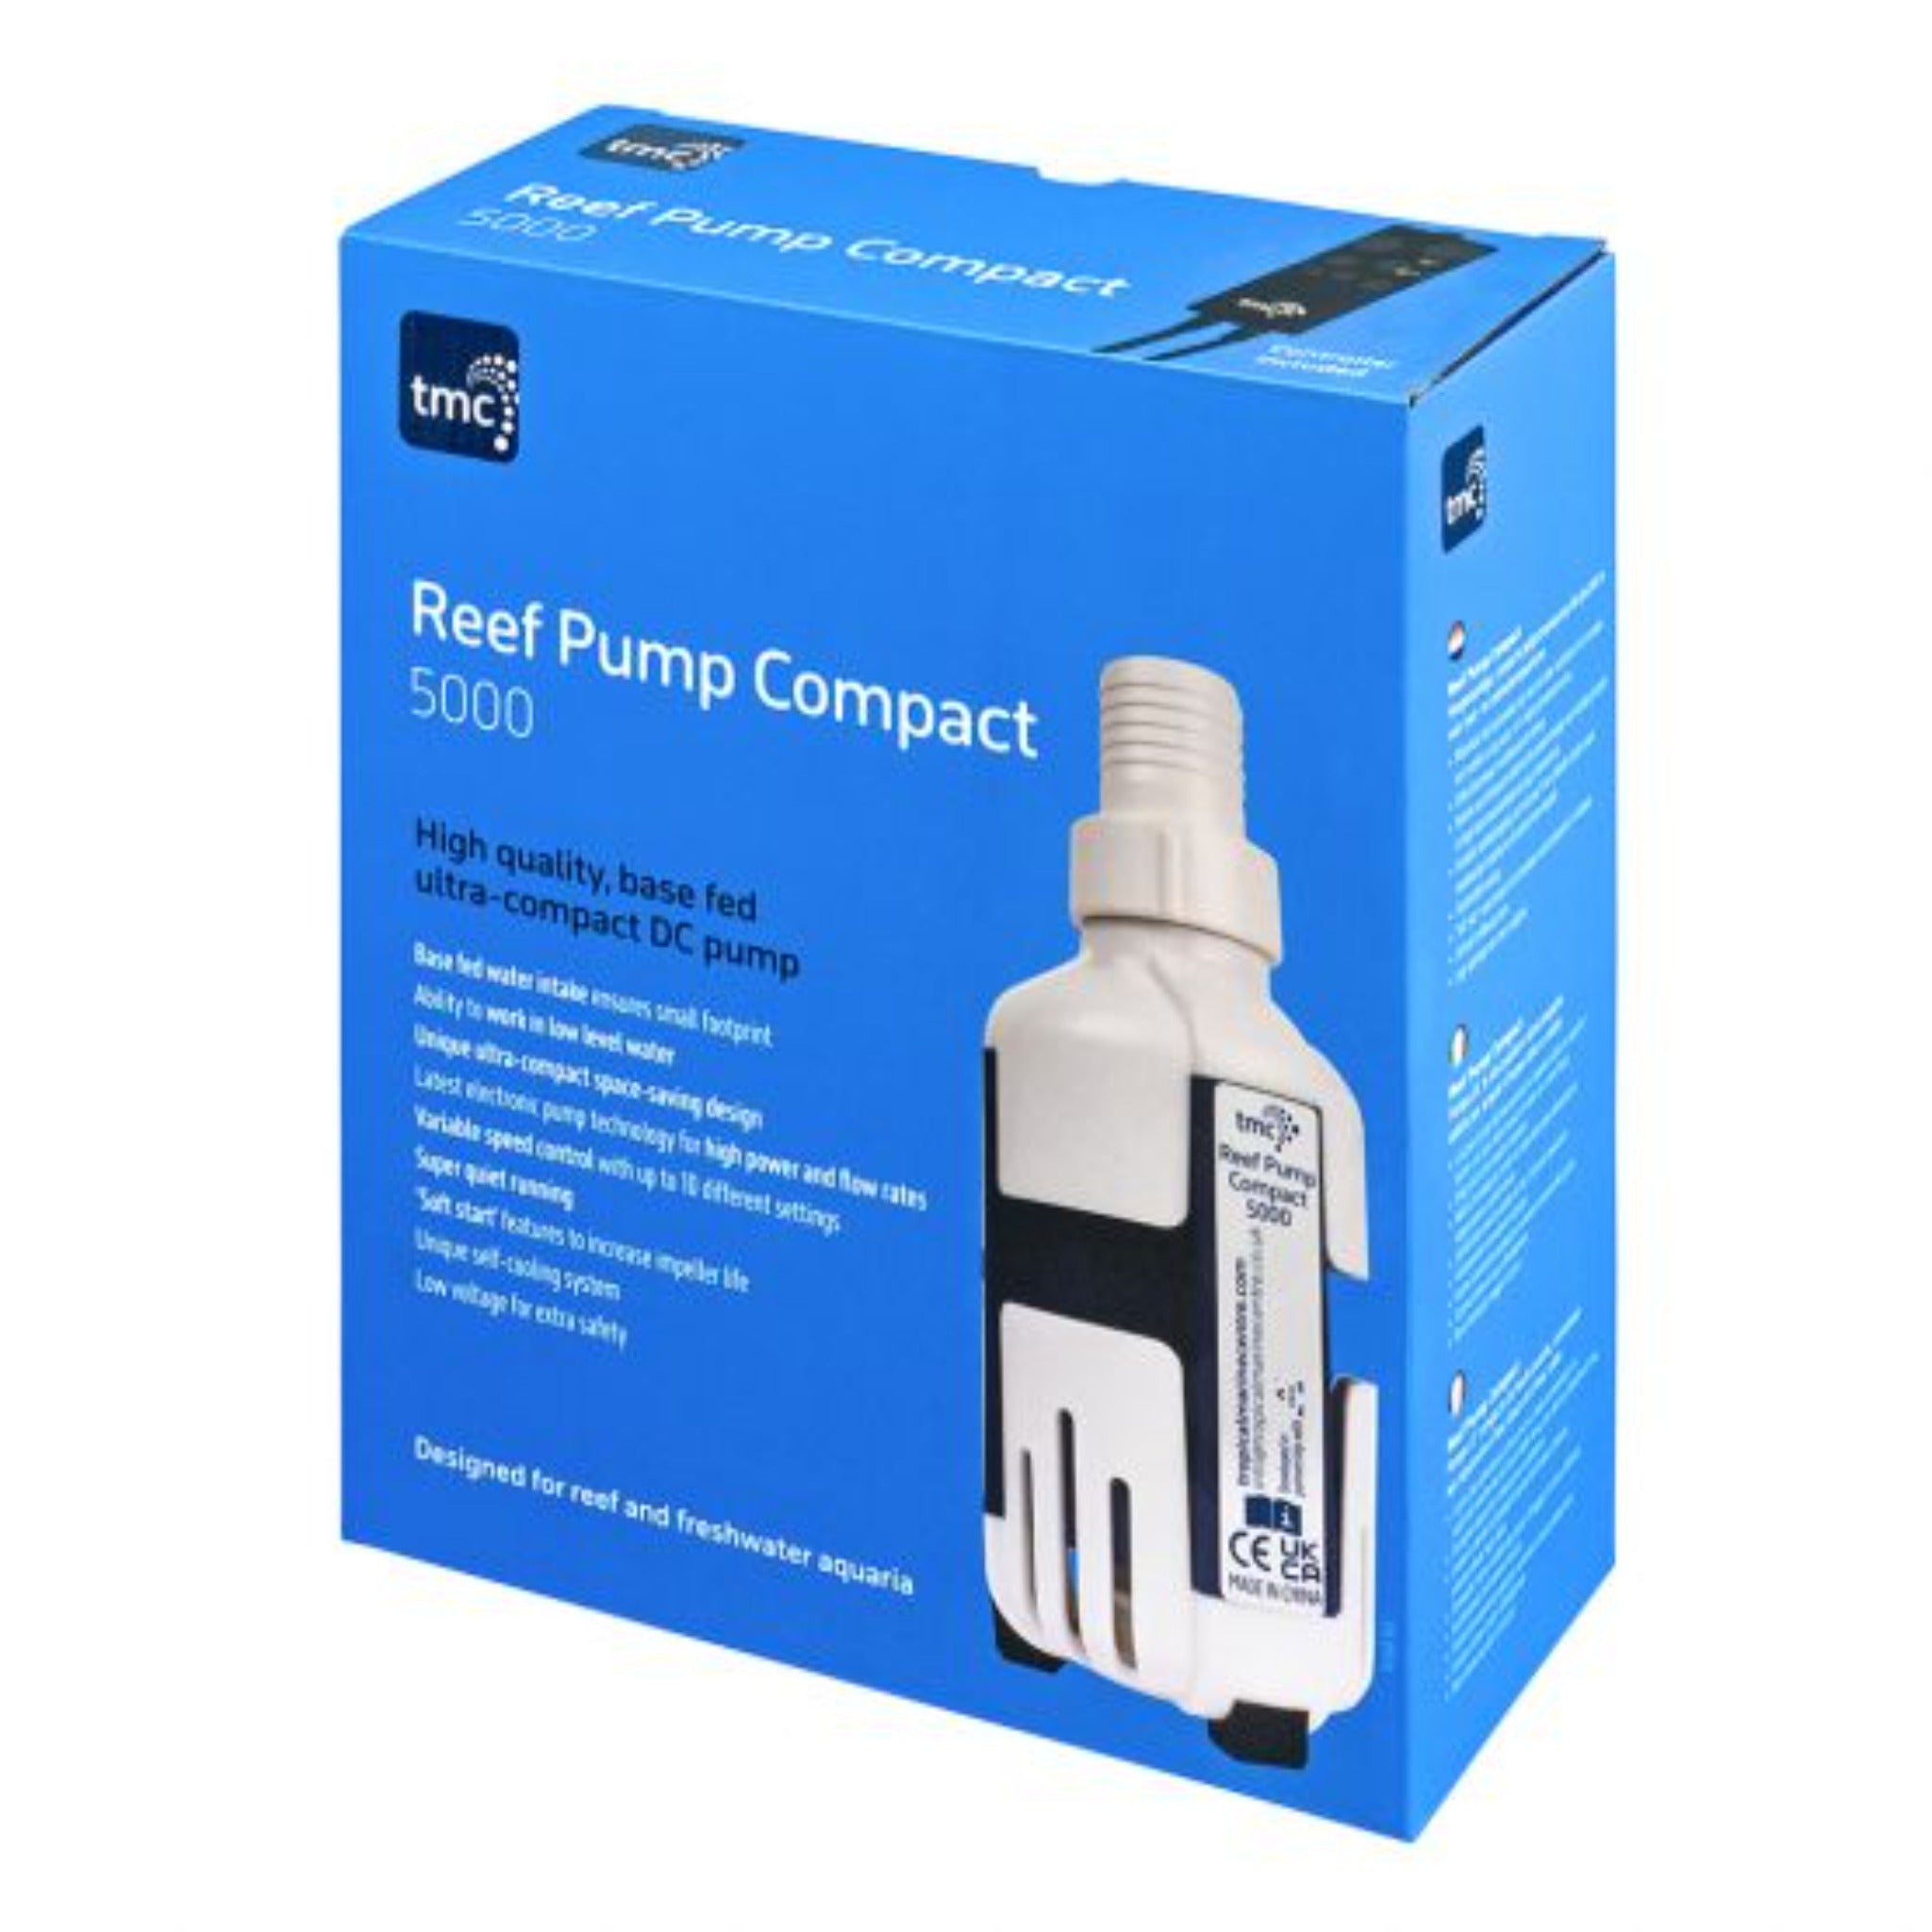 TMC Reef-Pump Compact 5000